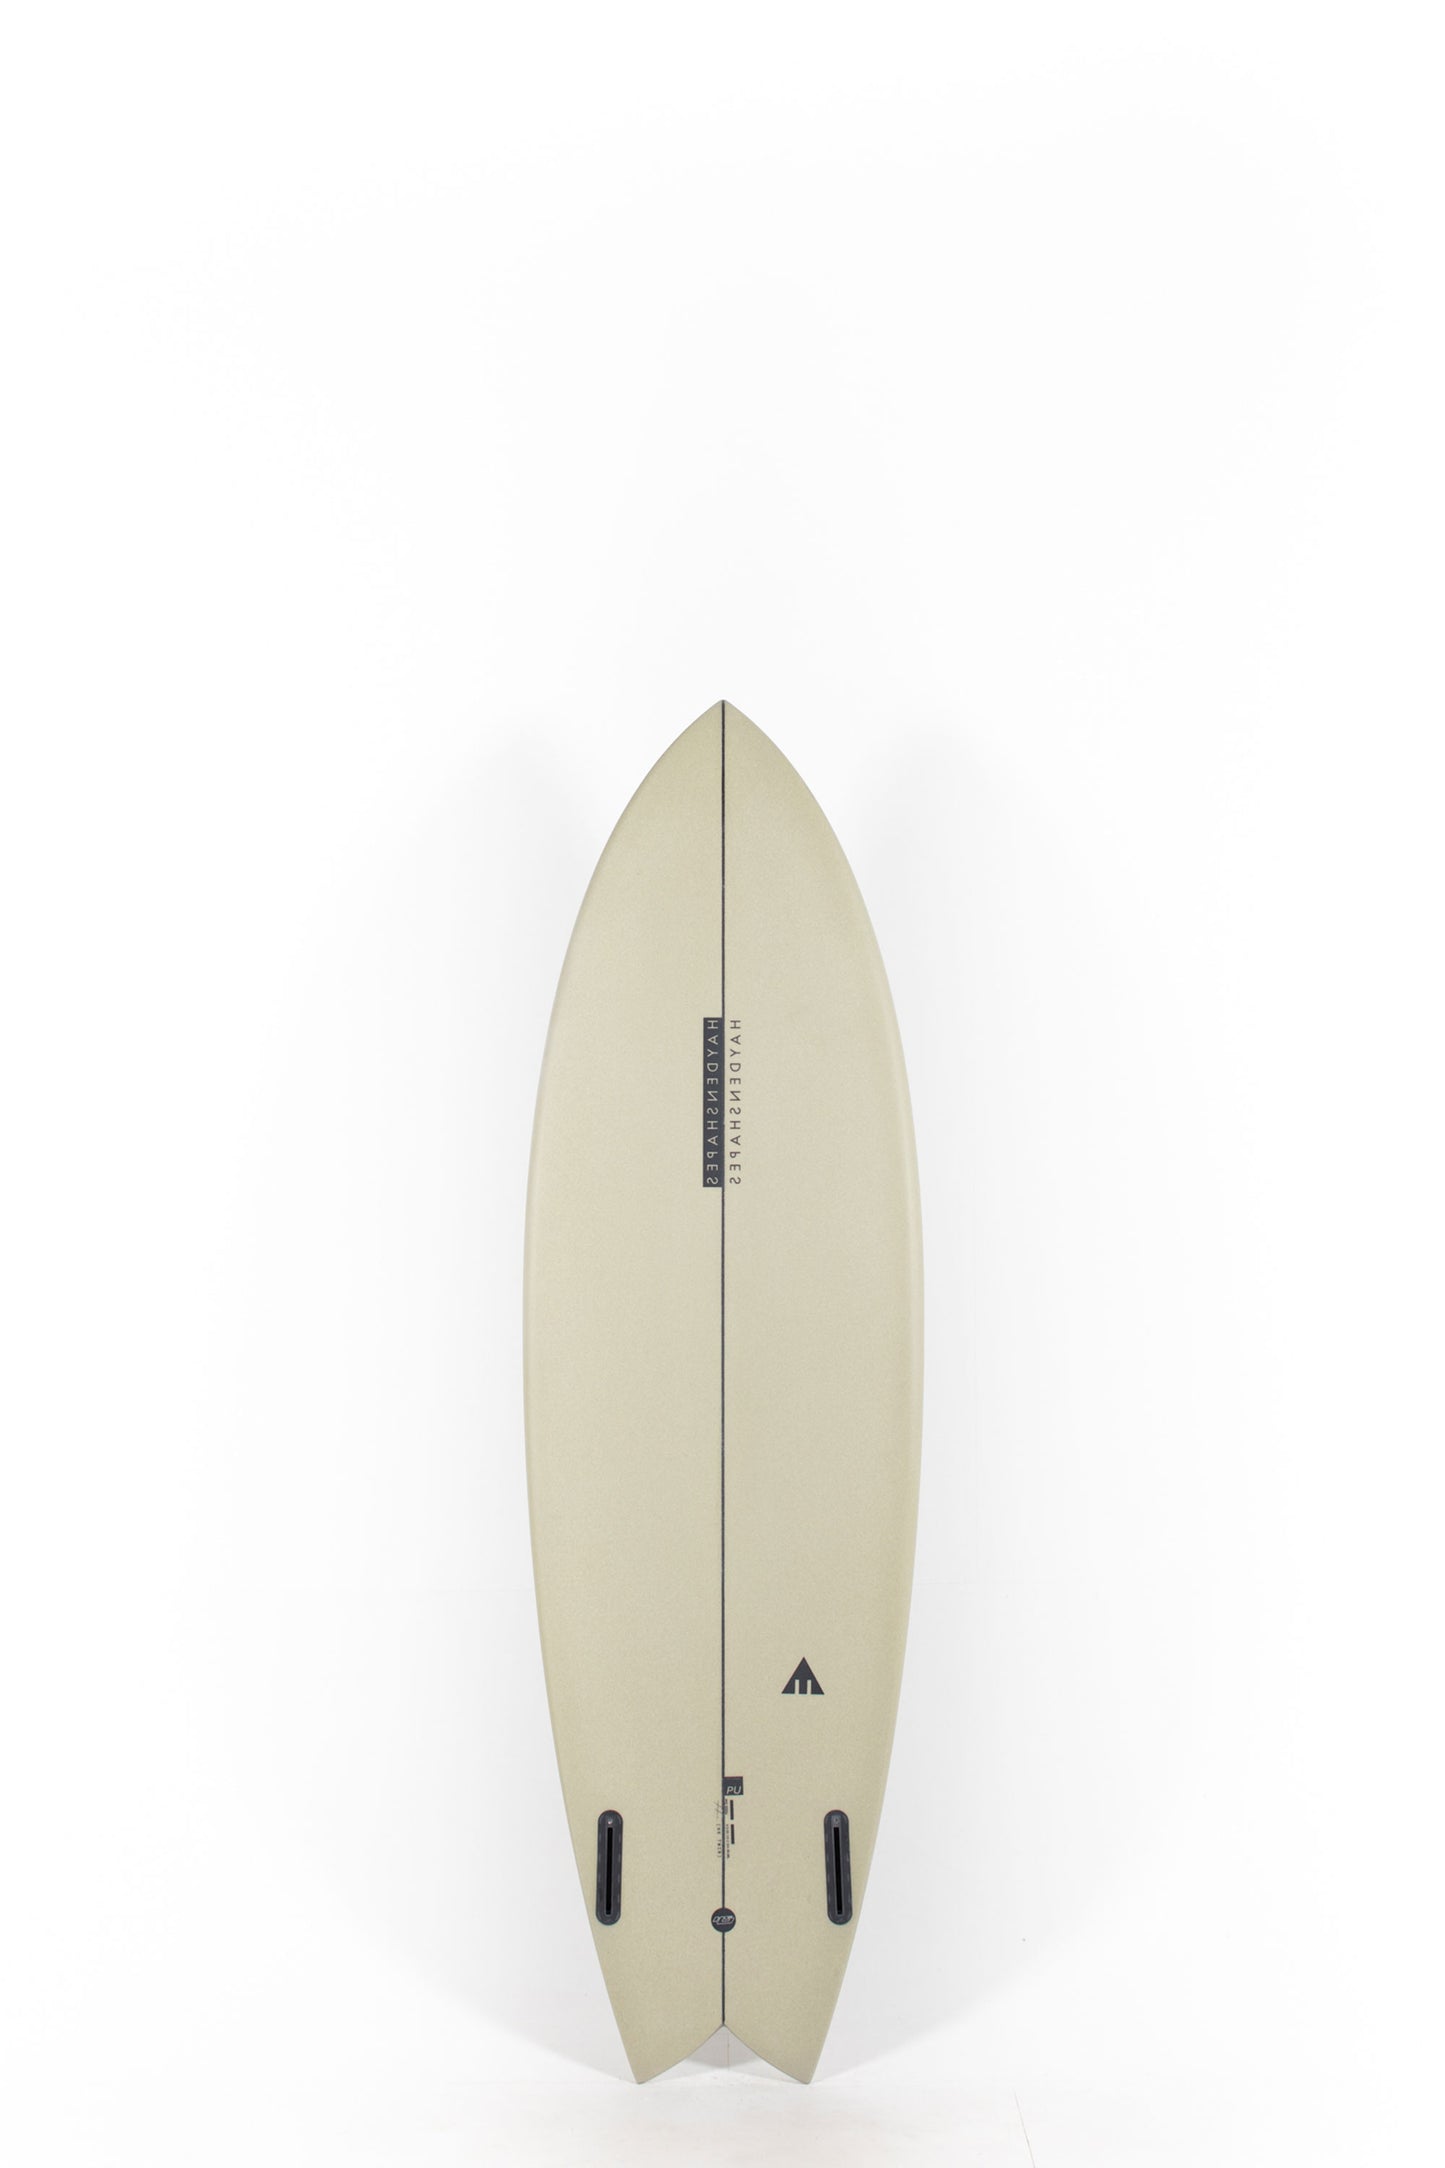 Pukas Surf Shop - HaydenShapes Surfboard - HYPTO KRYPTO TWIN PU - 6'0" X 20 1/2" X 2 3/4" - 36.98L